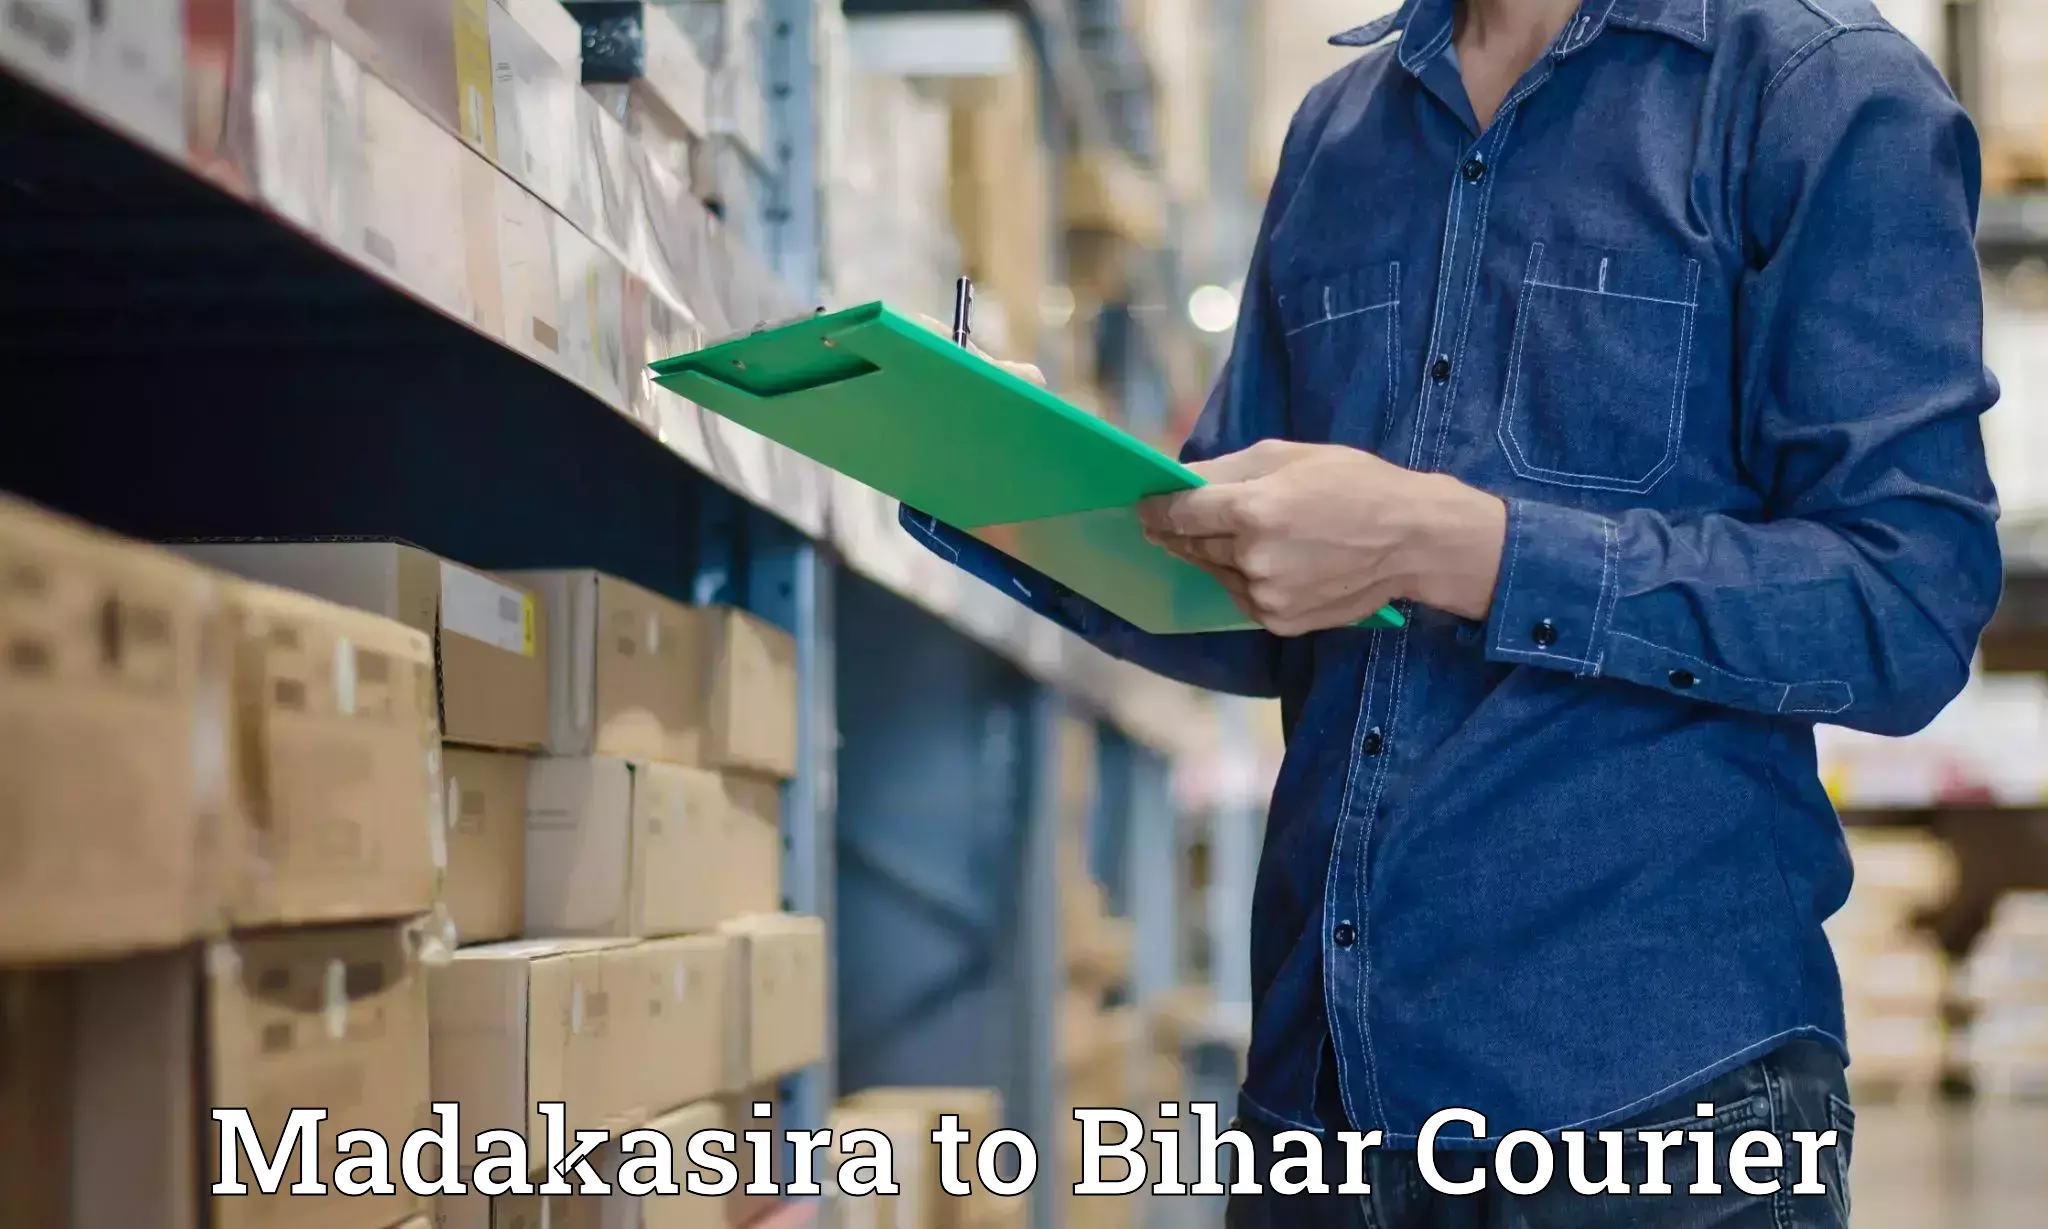 Courier service partnerships Madakasira to Bihar